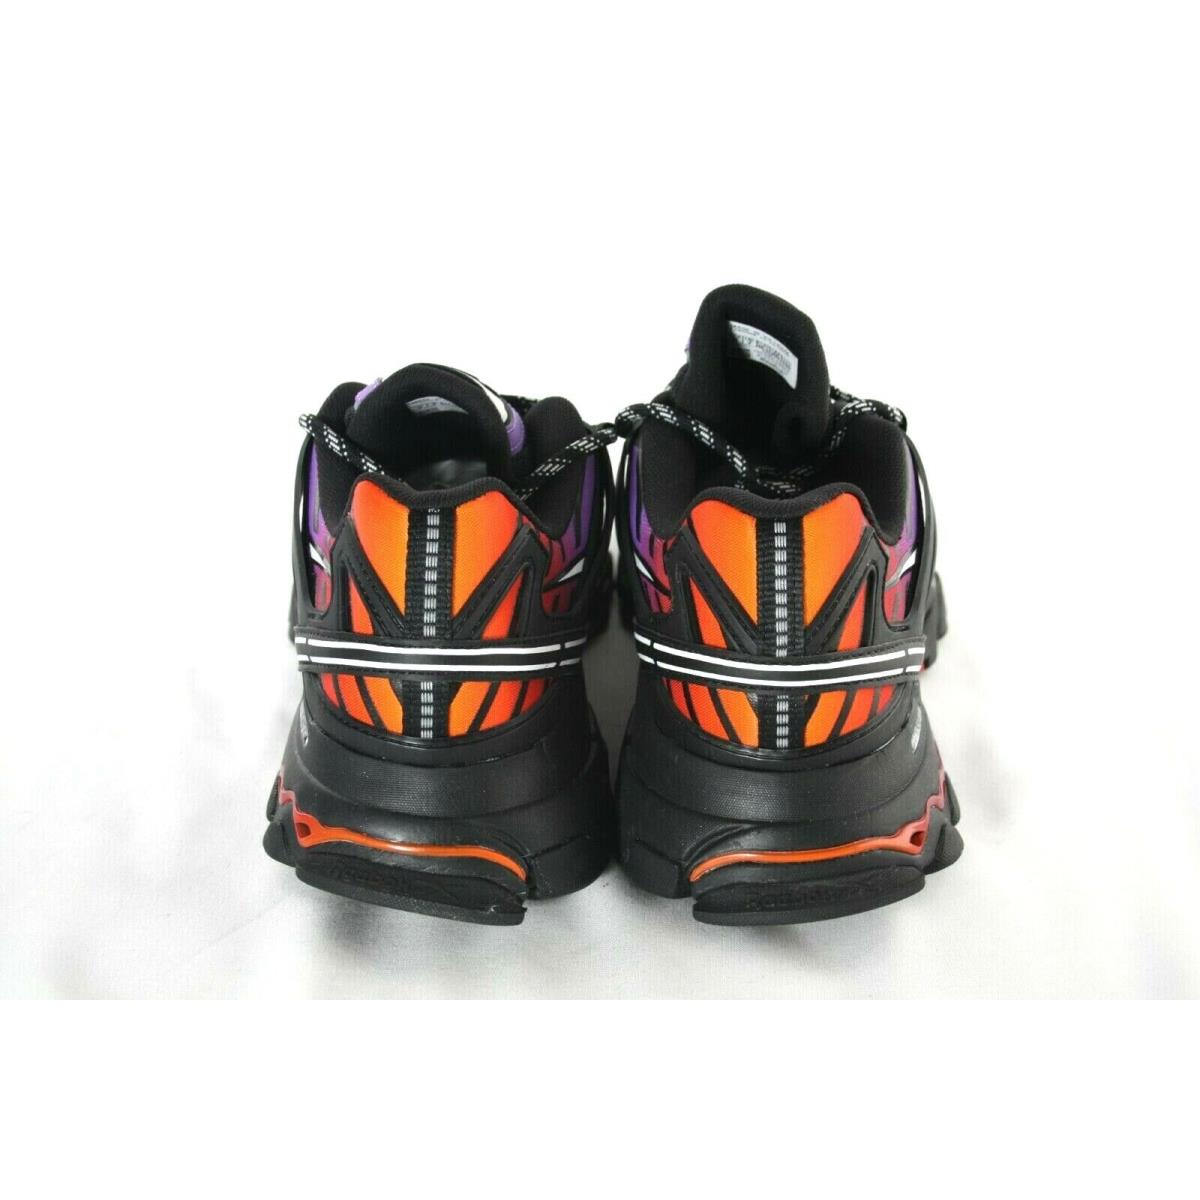 Reebok shoes DMX TRAIL SHADOW - Multicolor 4